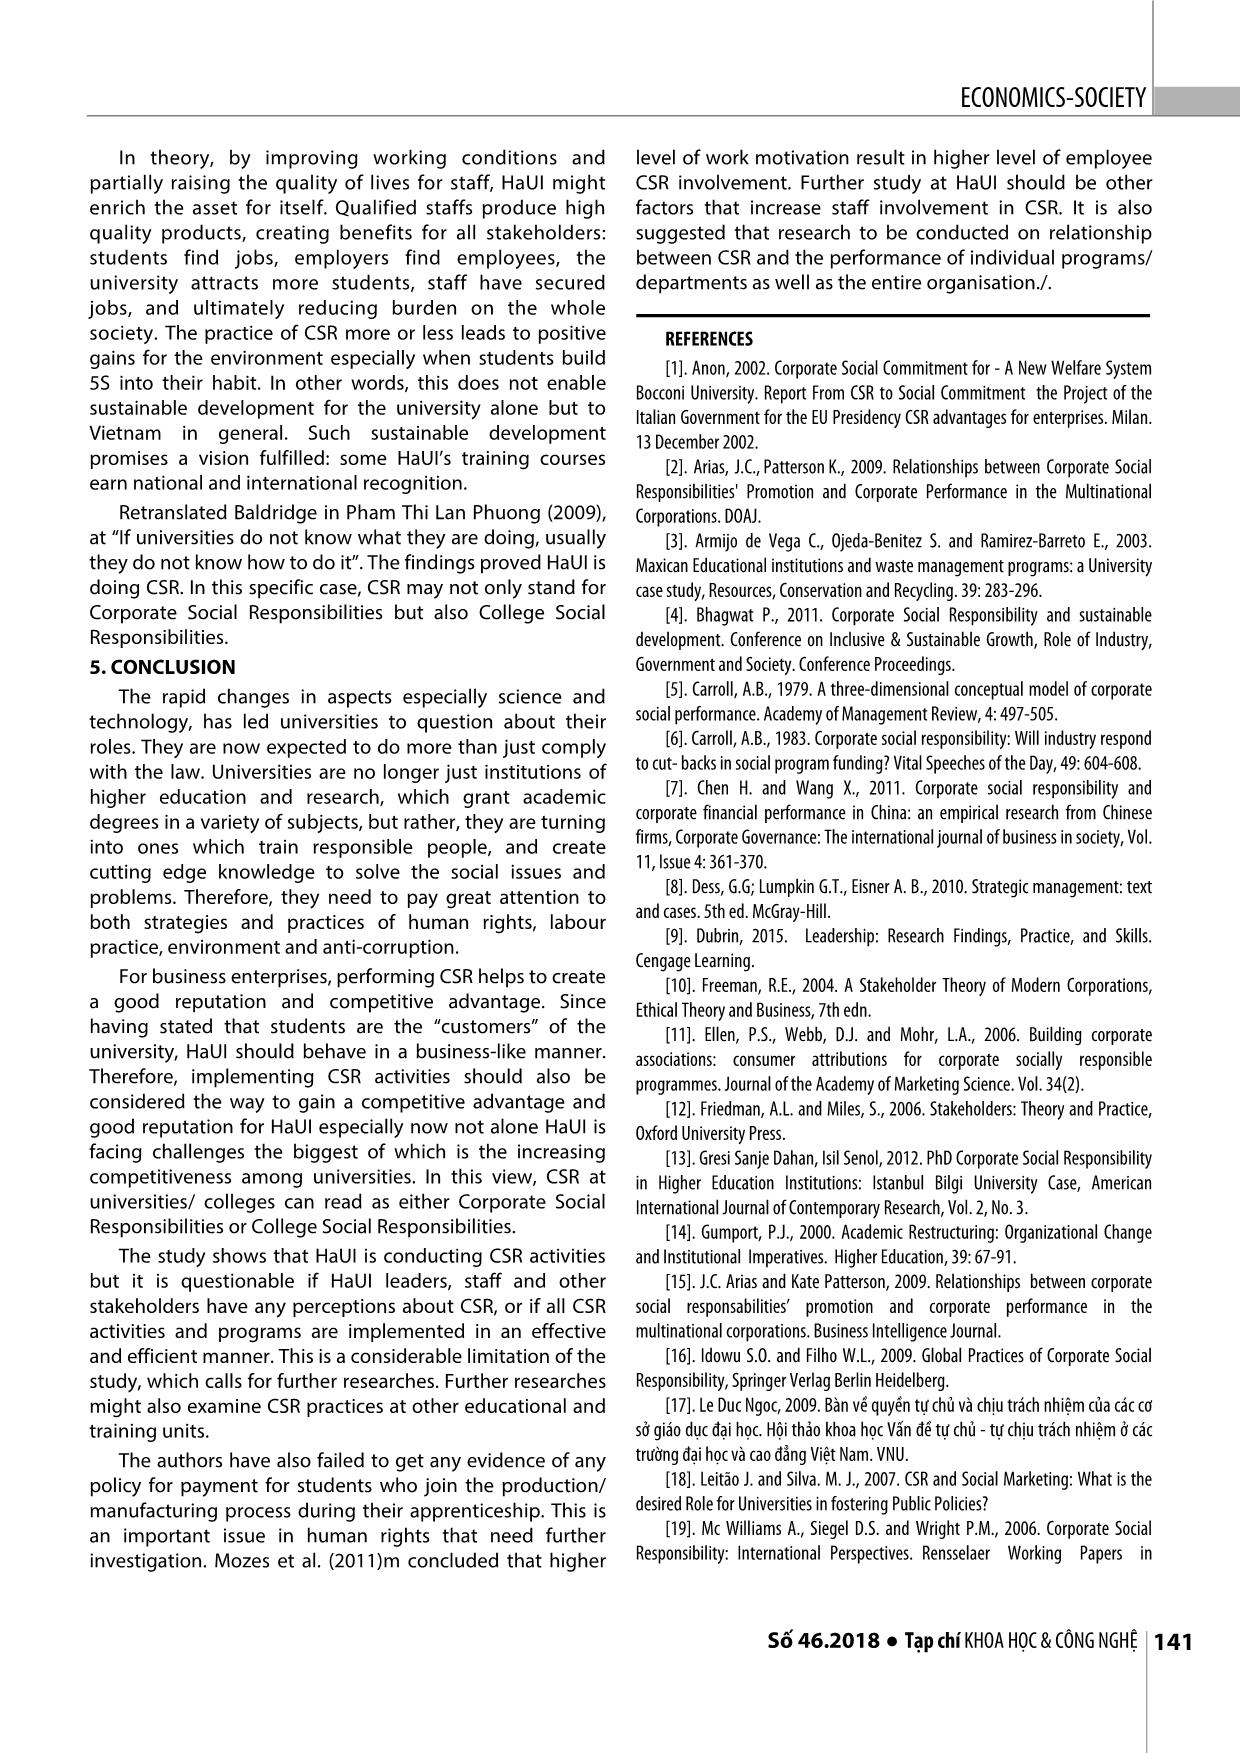 CSR activities at universities: The case of Hanoi University of Industry trang 7